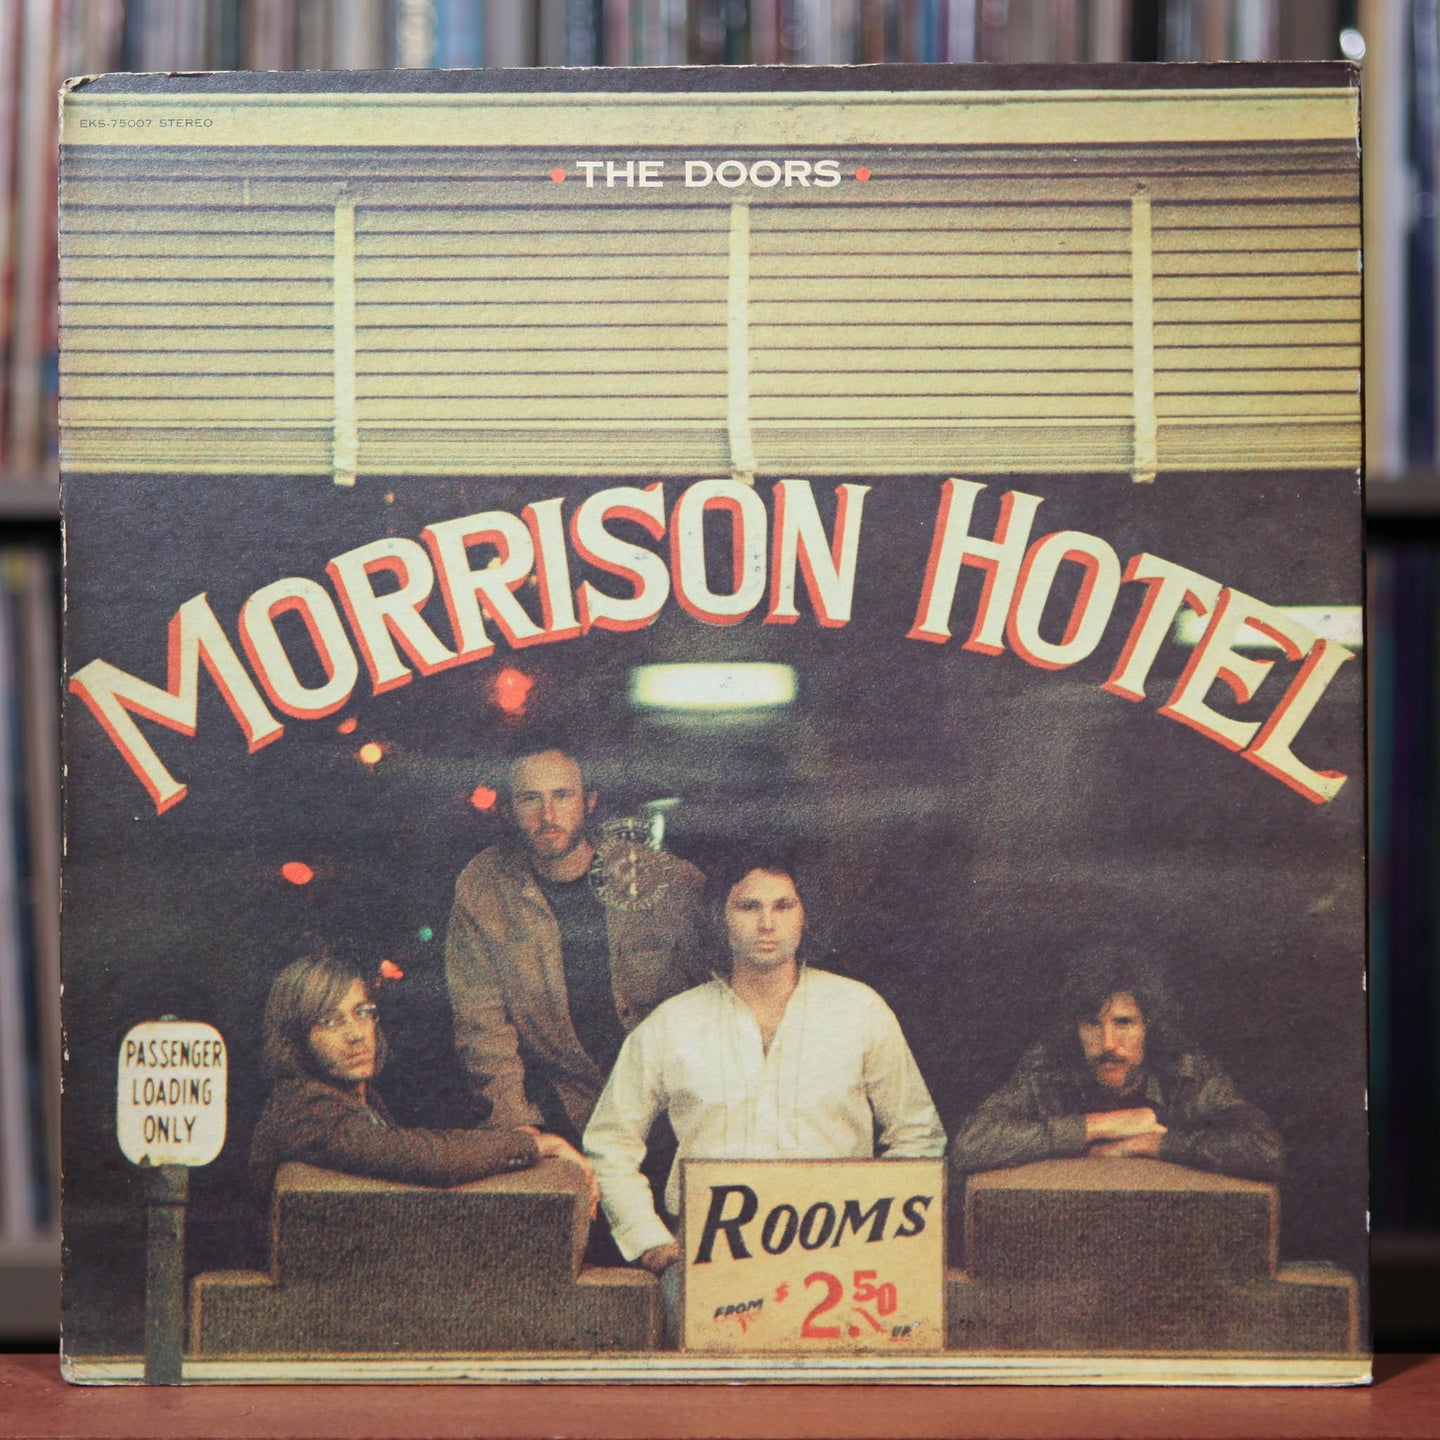 The Doors - Morrison Hotel - 1970 Elektra, VG+/VG